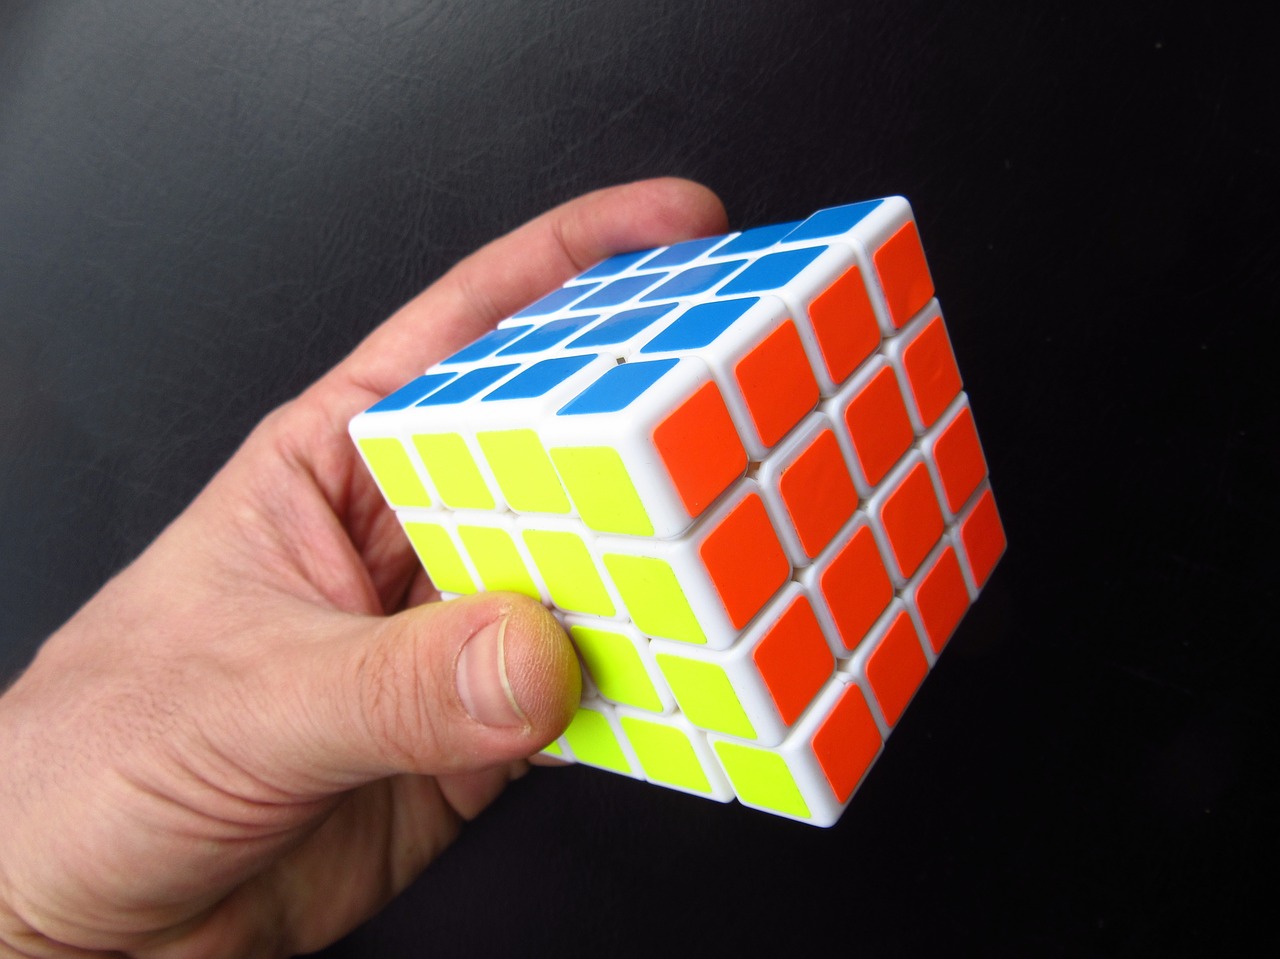 magic cube hand puzzle free photo